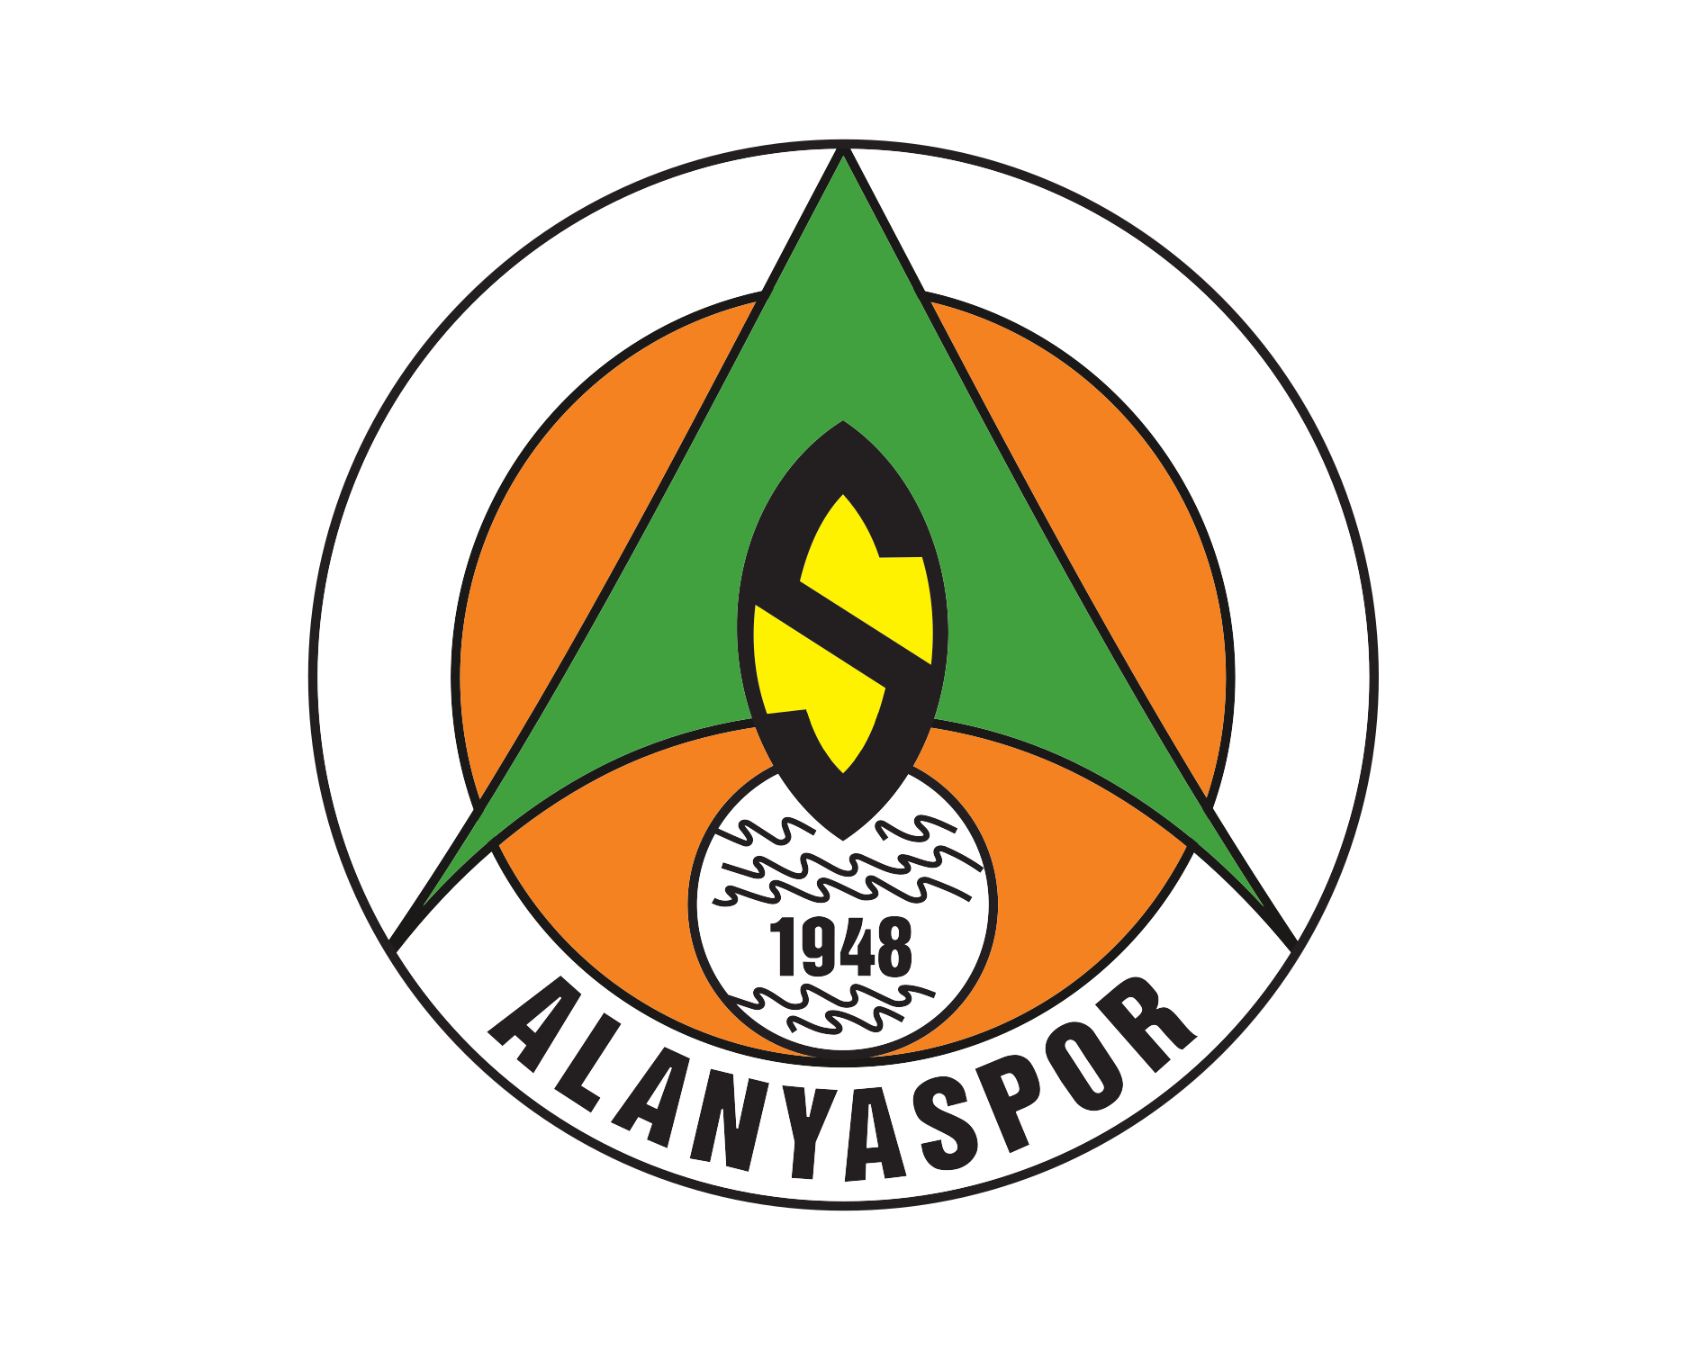 alanyaspor-20-football-club-facts